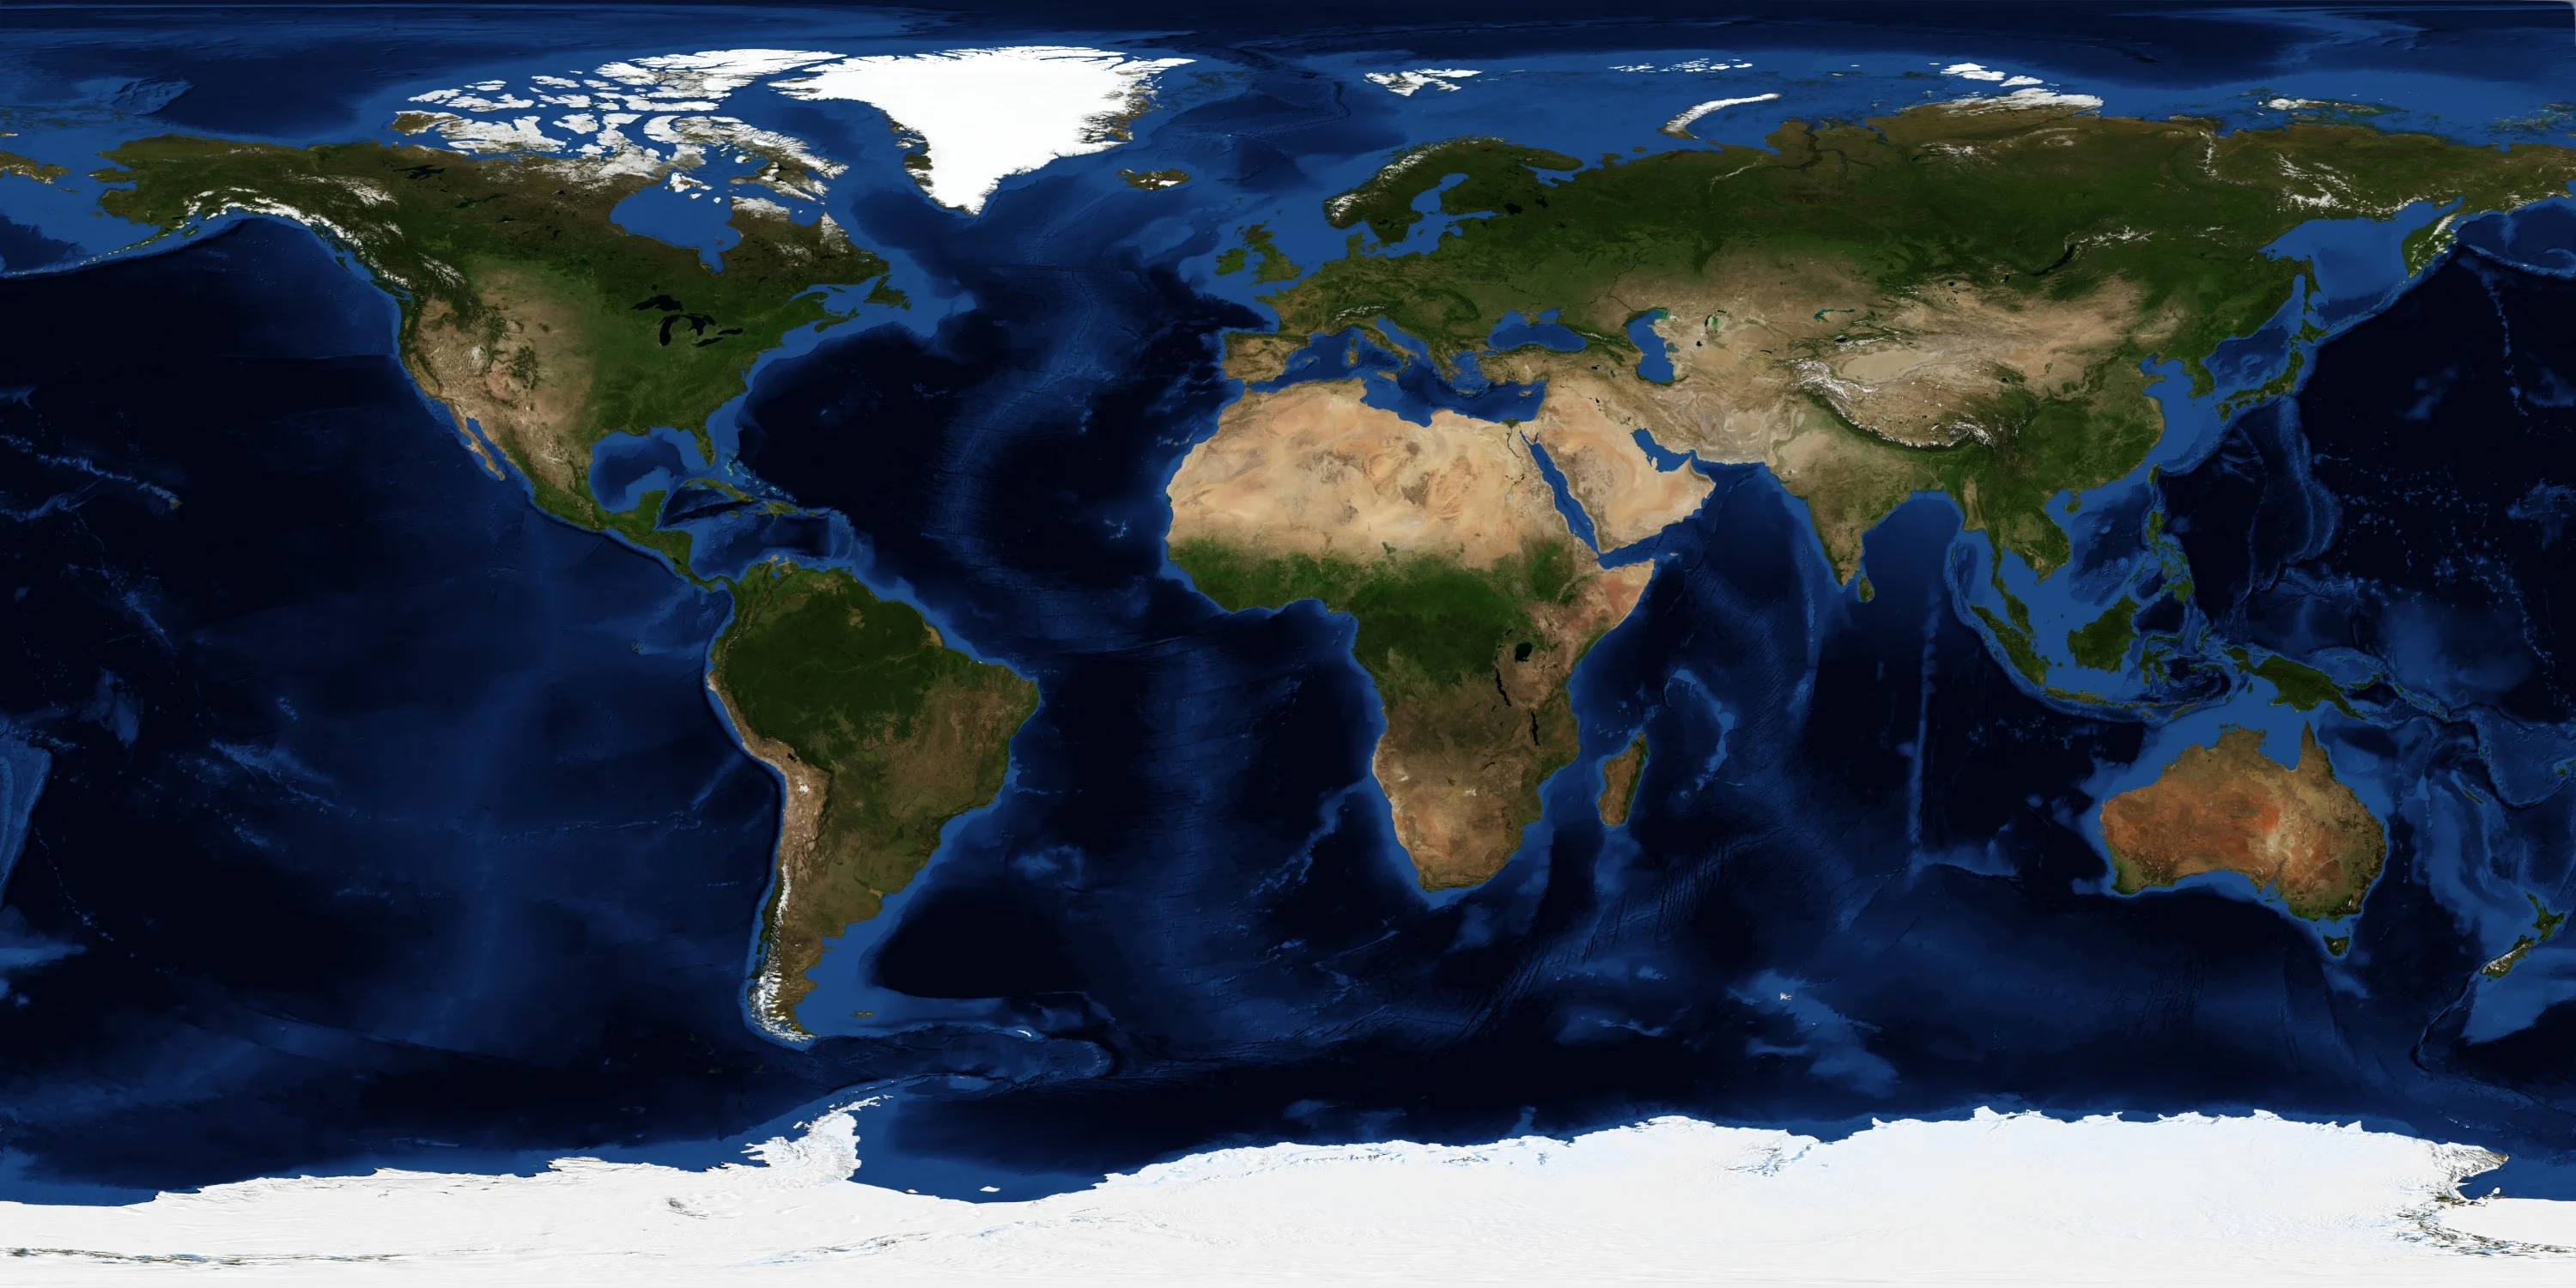 (NASA) Blue marble satellite image of Earth